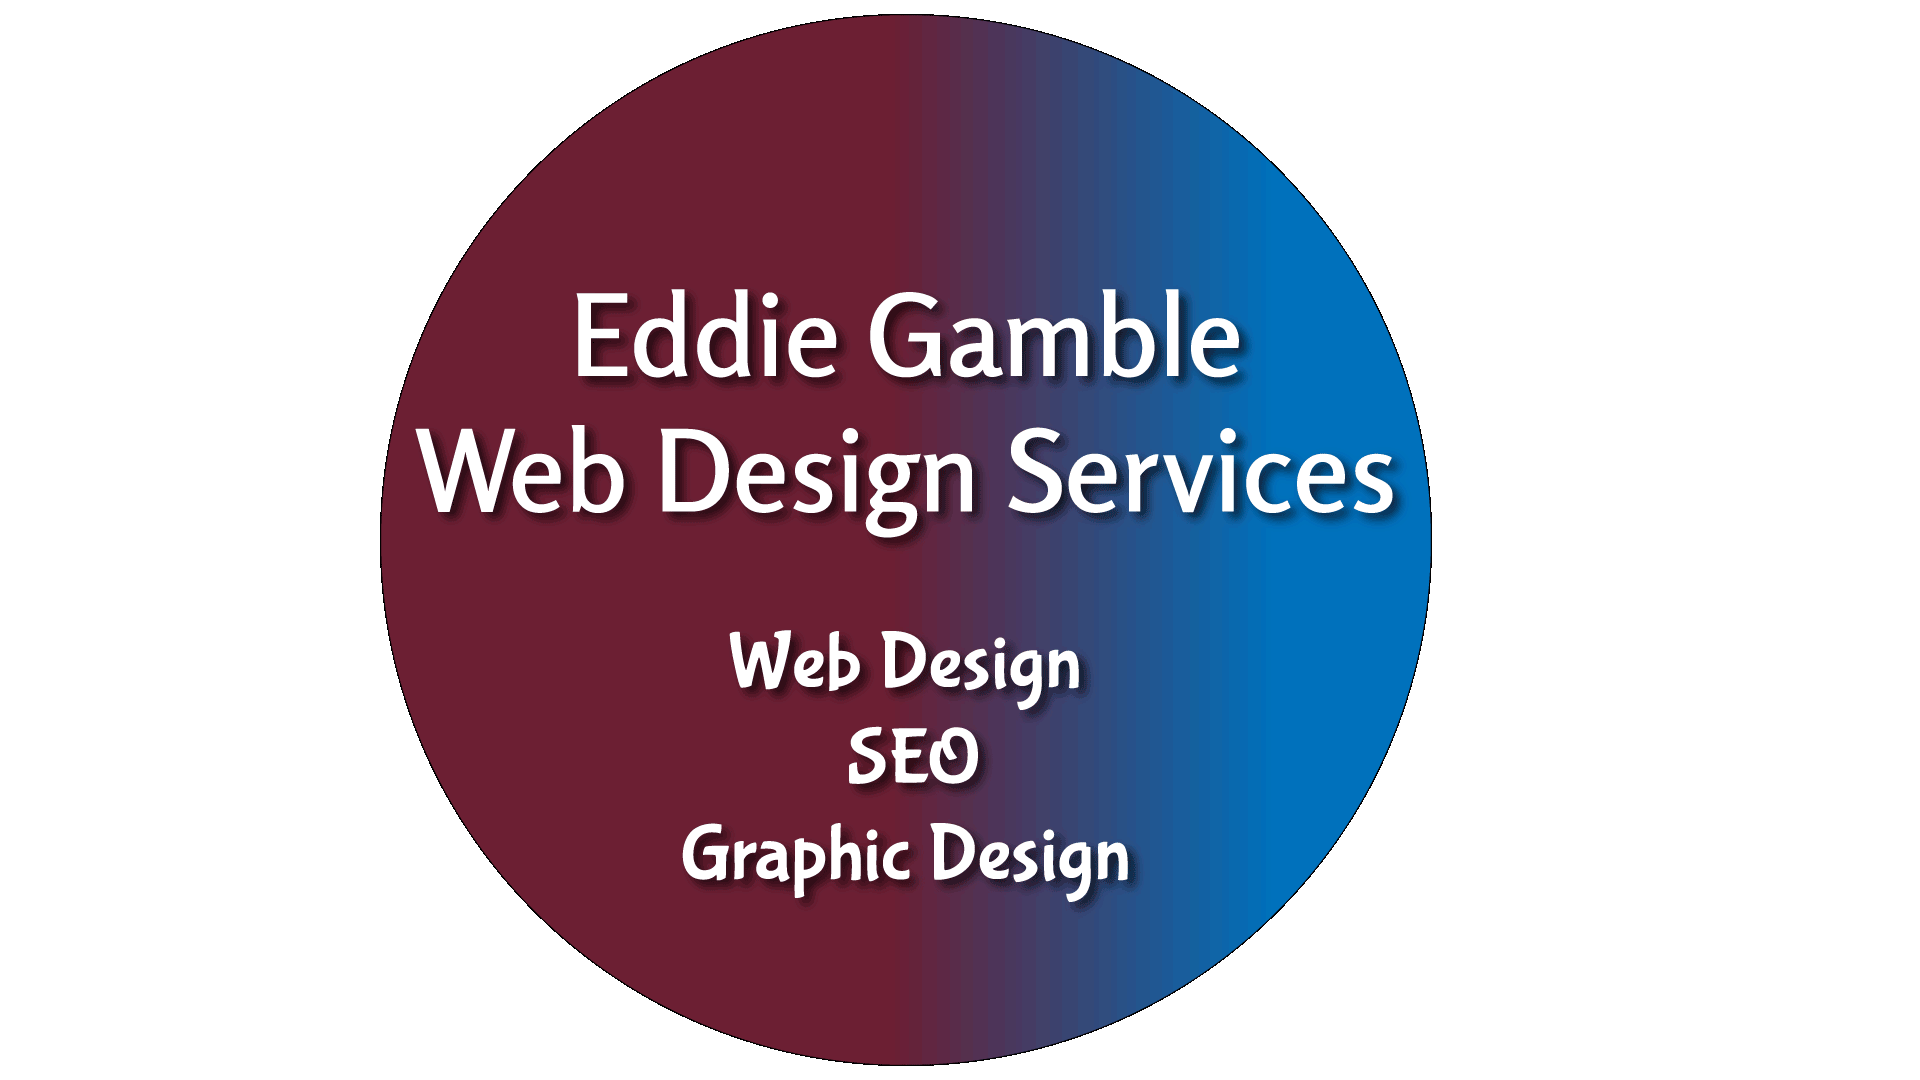 Eddie Gamble Web Design Services